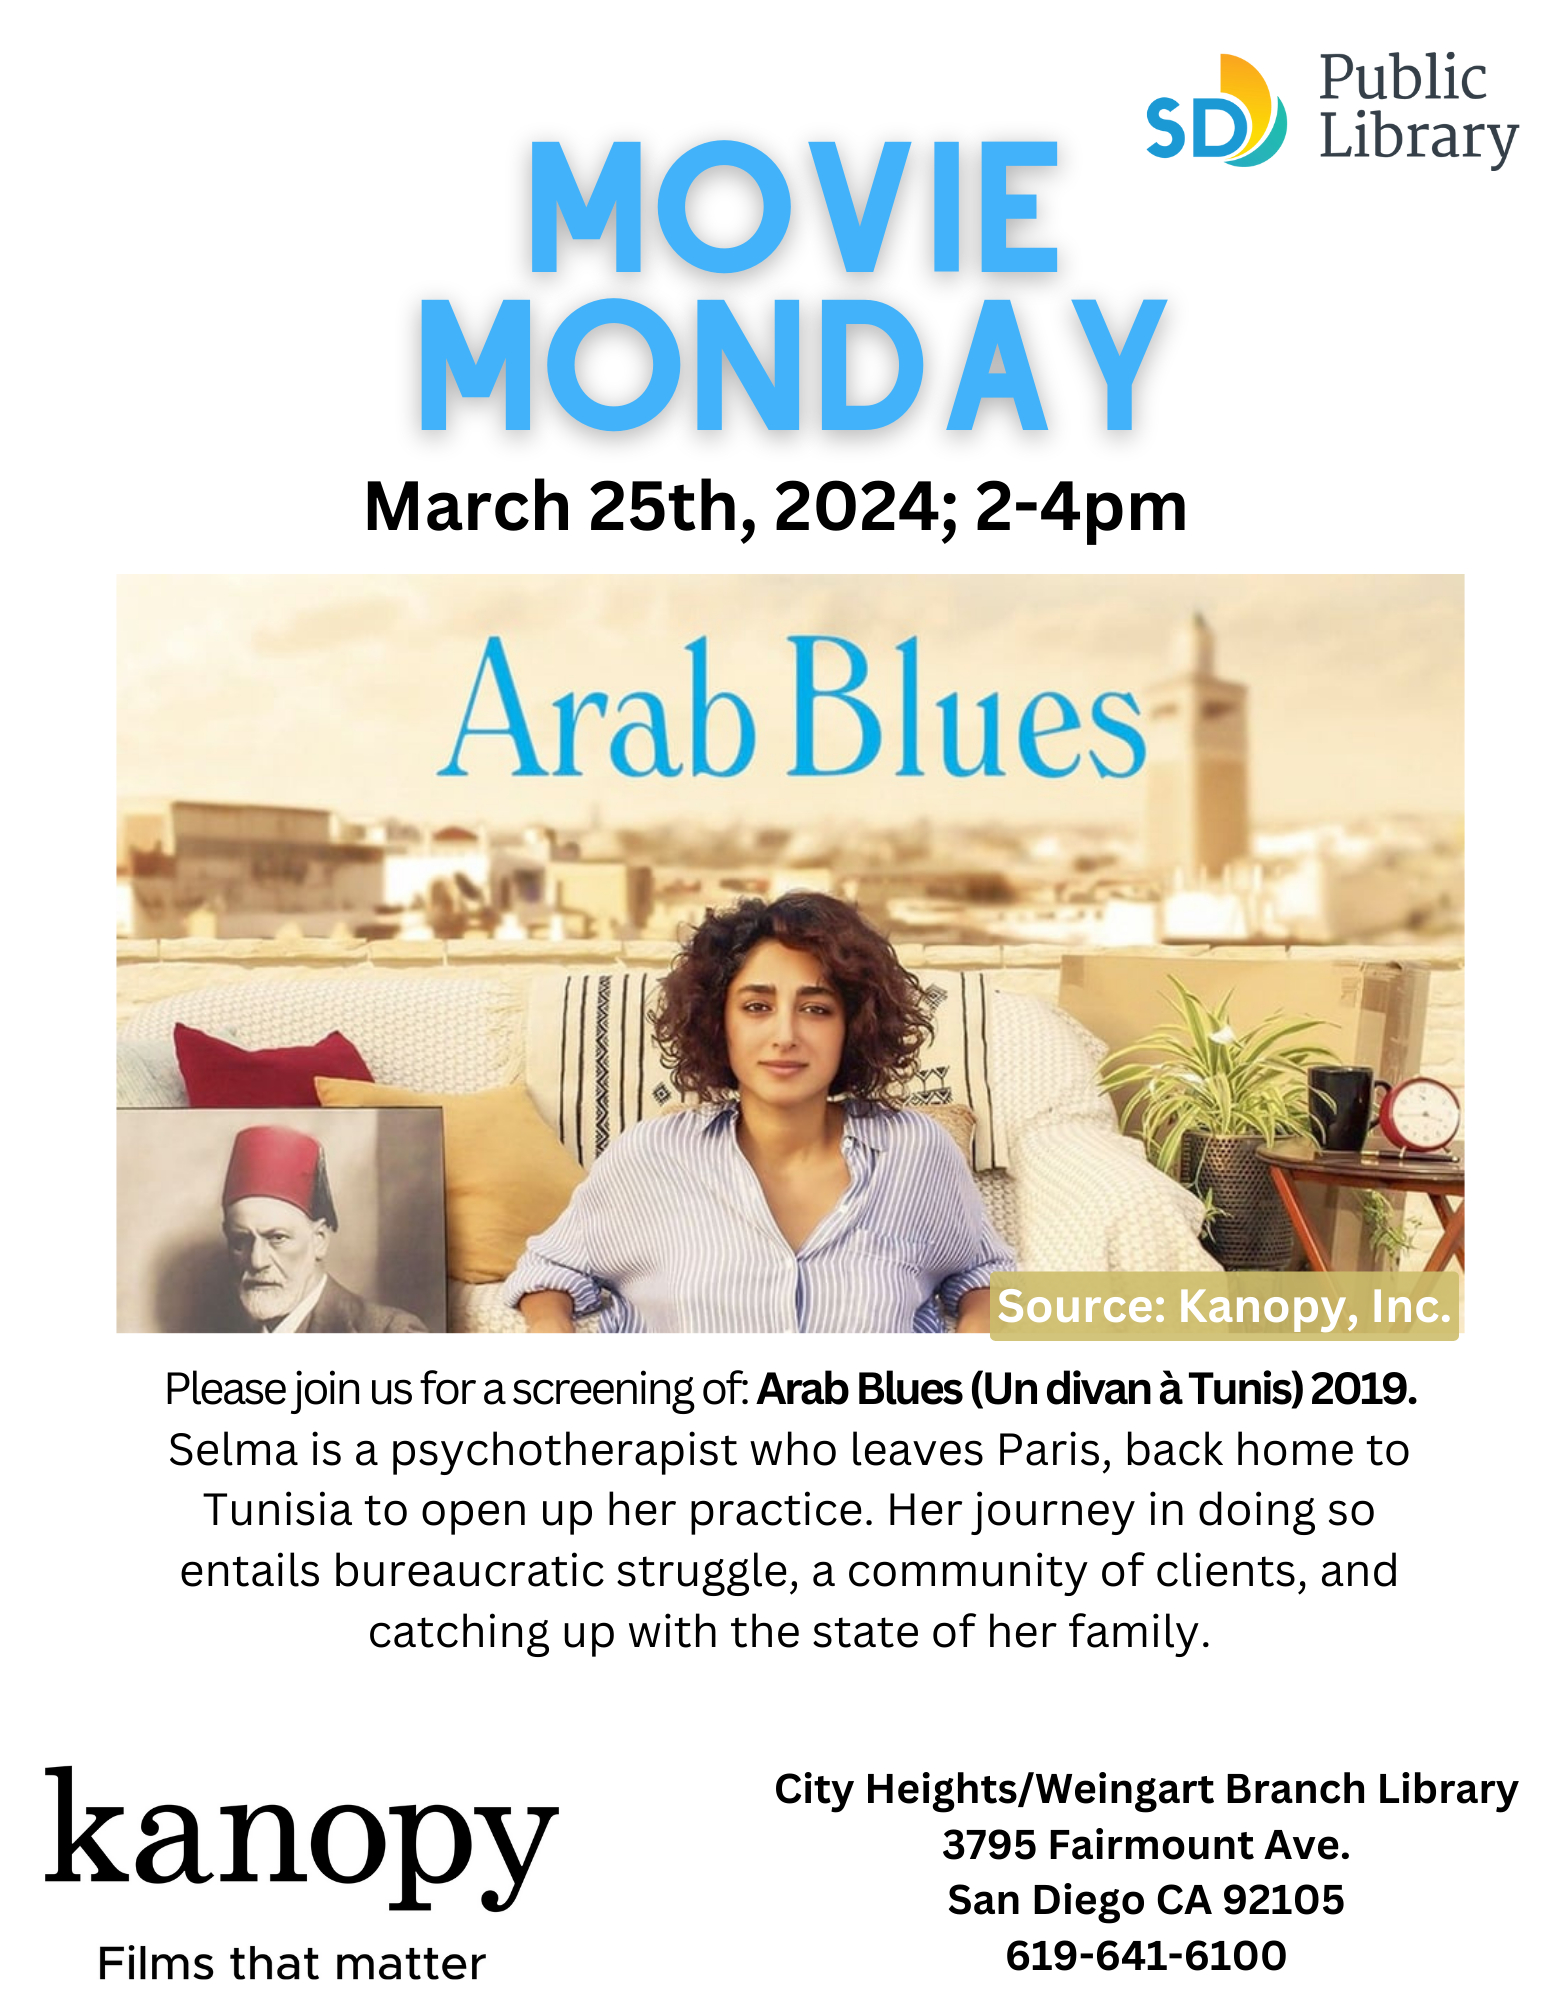 Arab Blues screening March 25th, 2-4pm. 